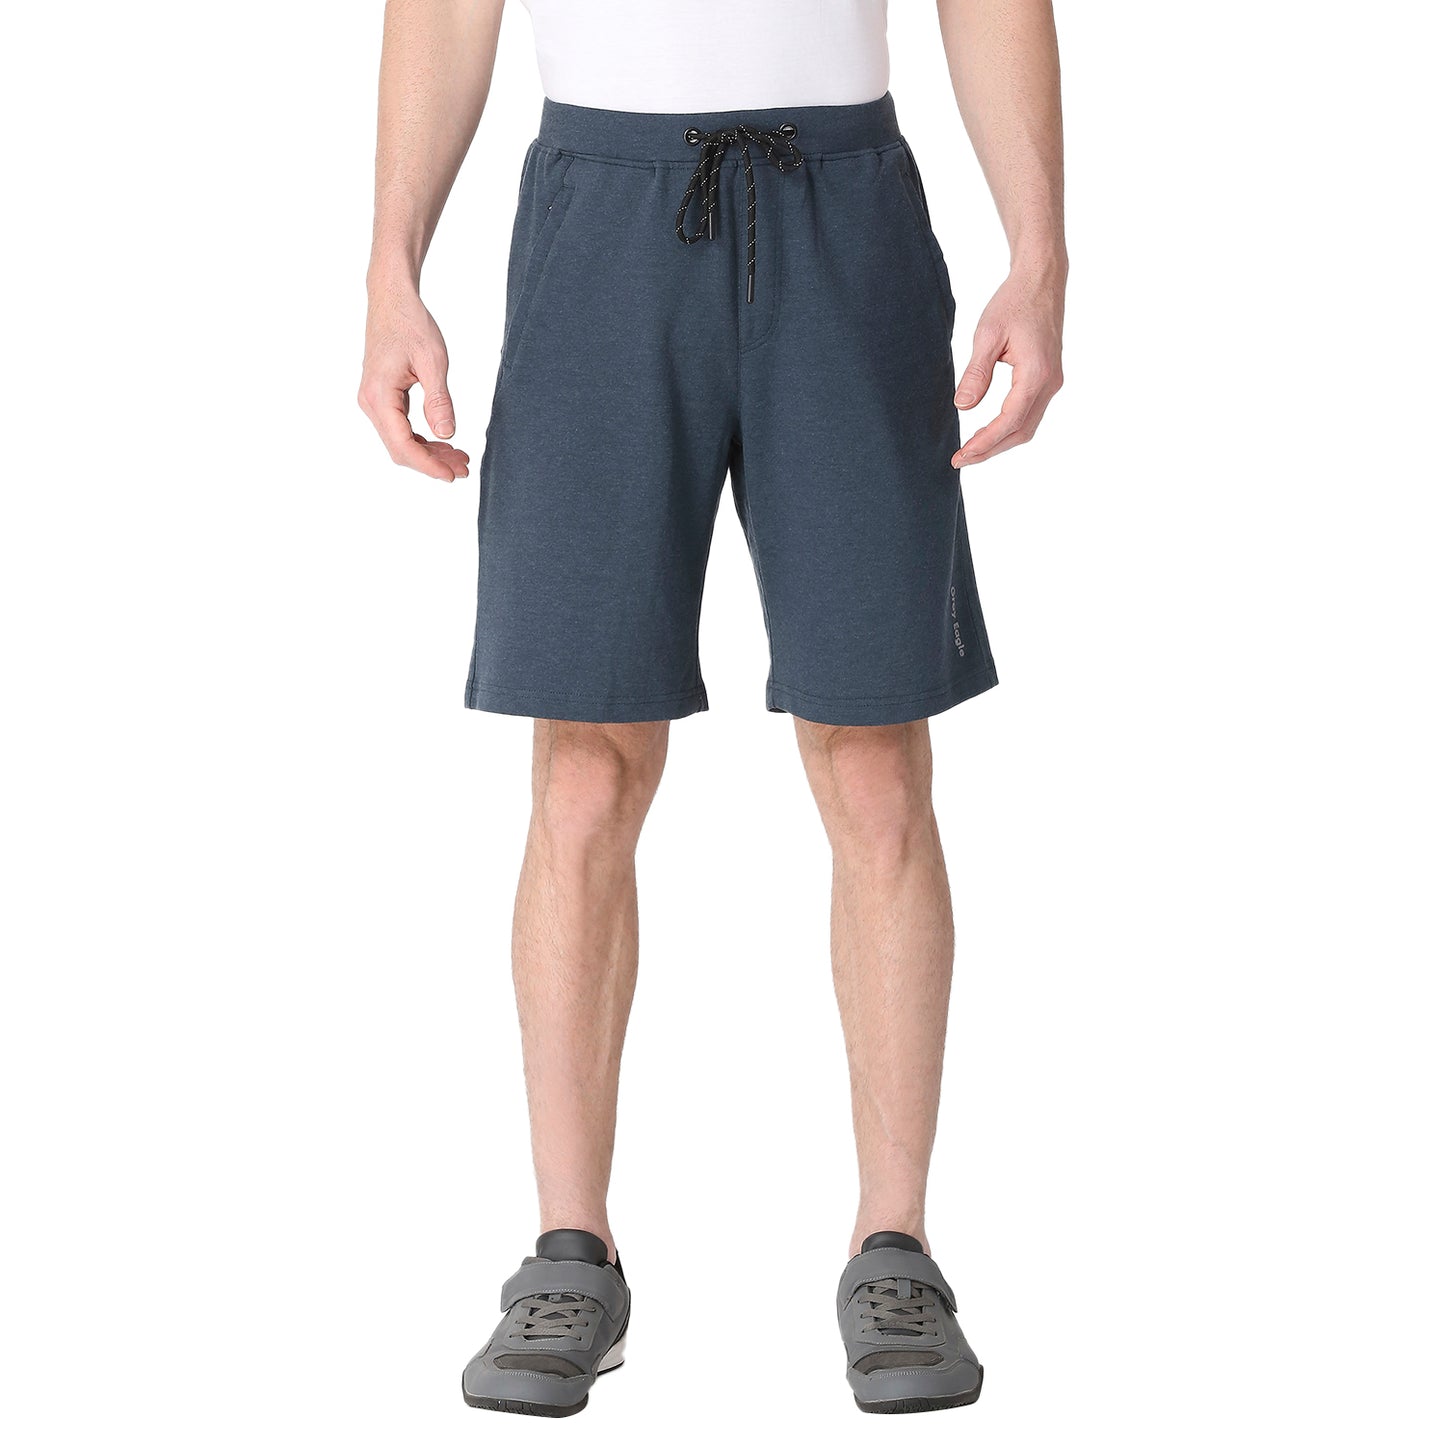 AthleX Shorts